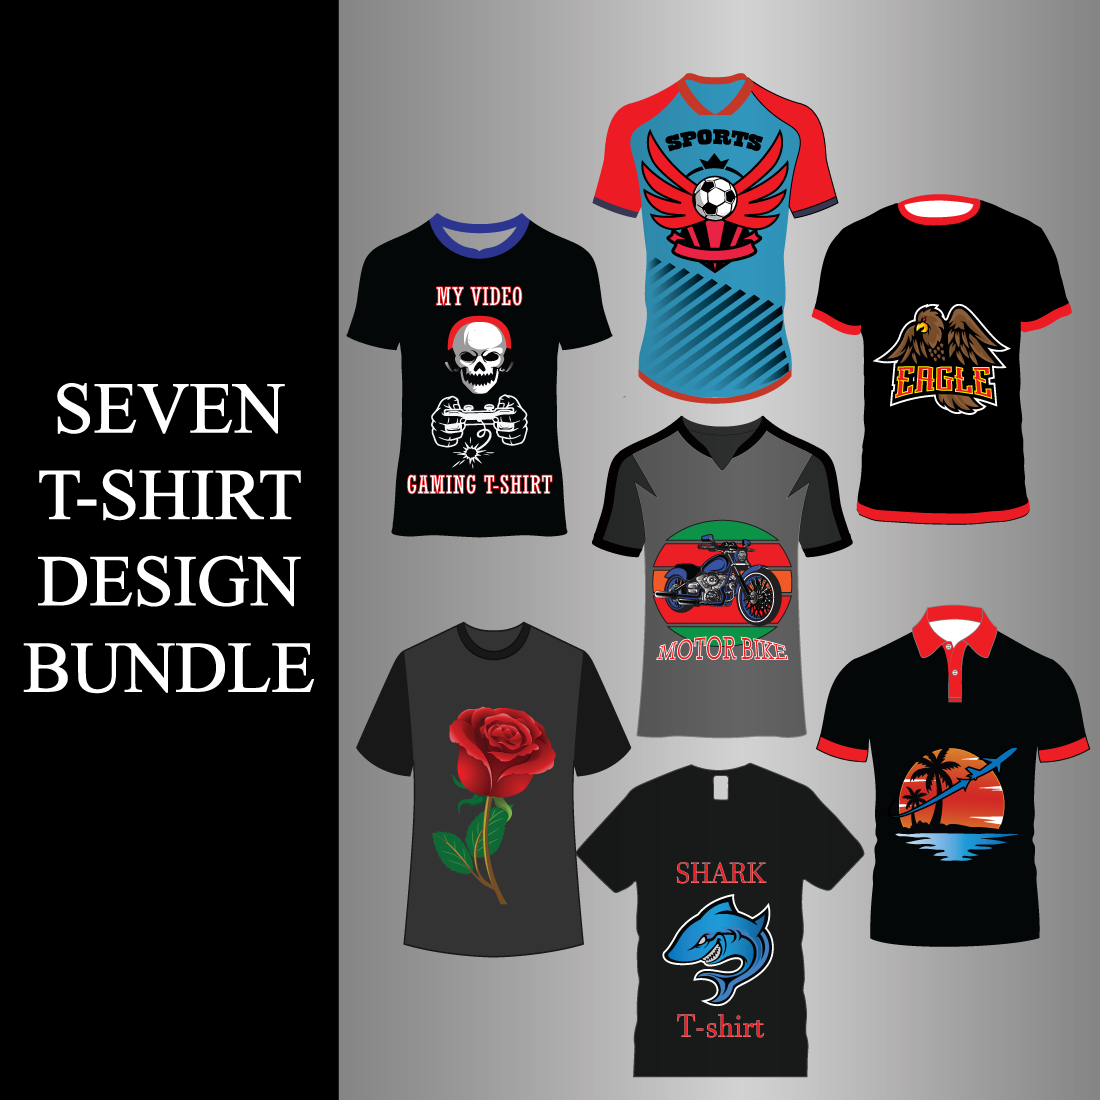 Seven T -Shirt Design Bundle cover image.